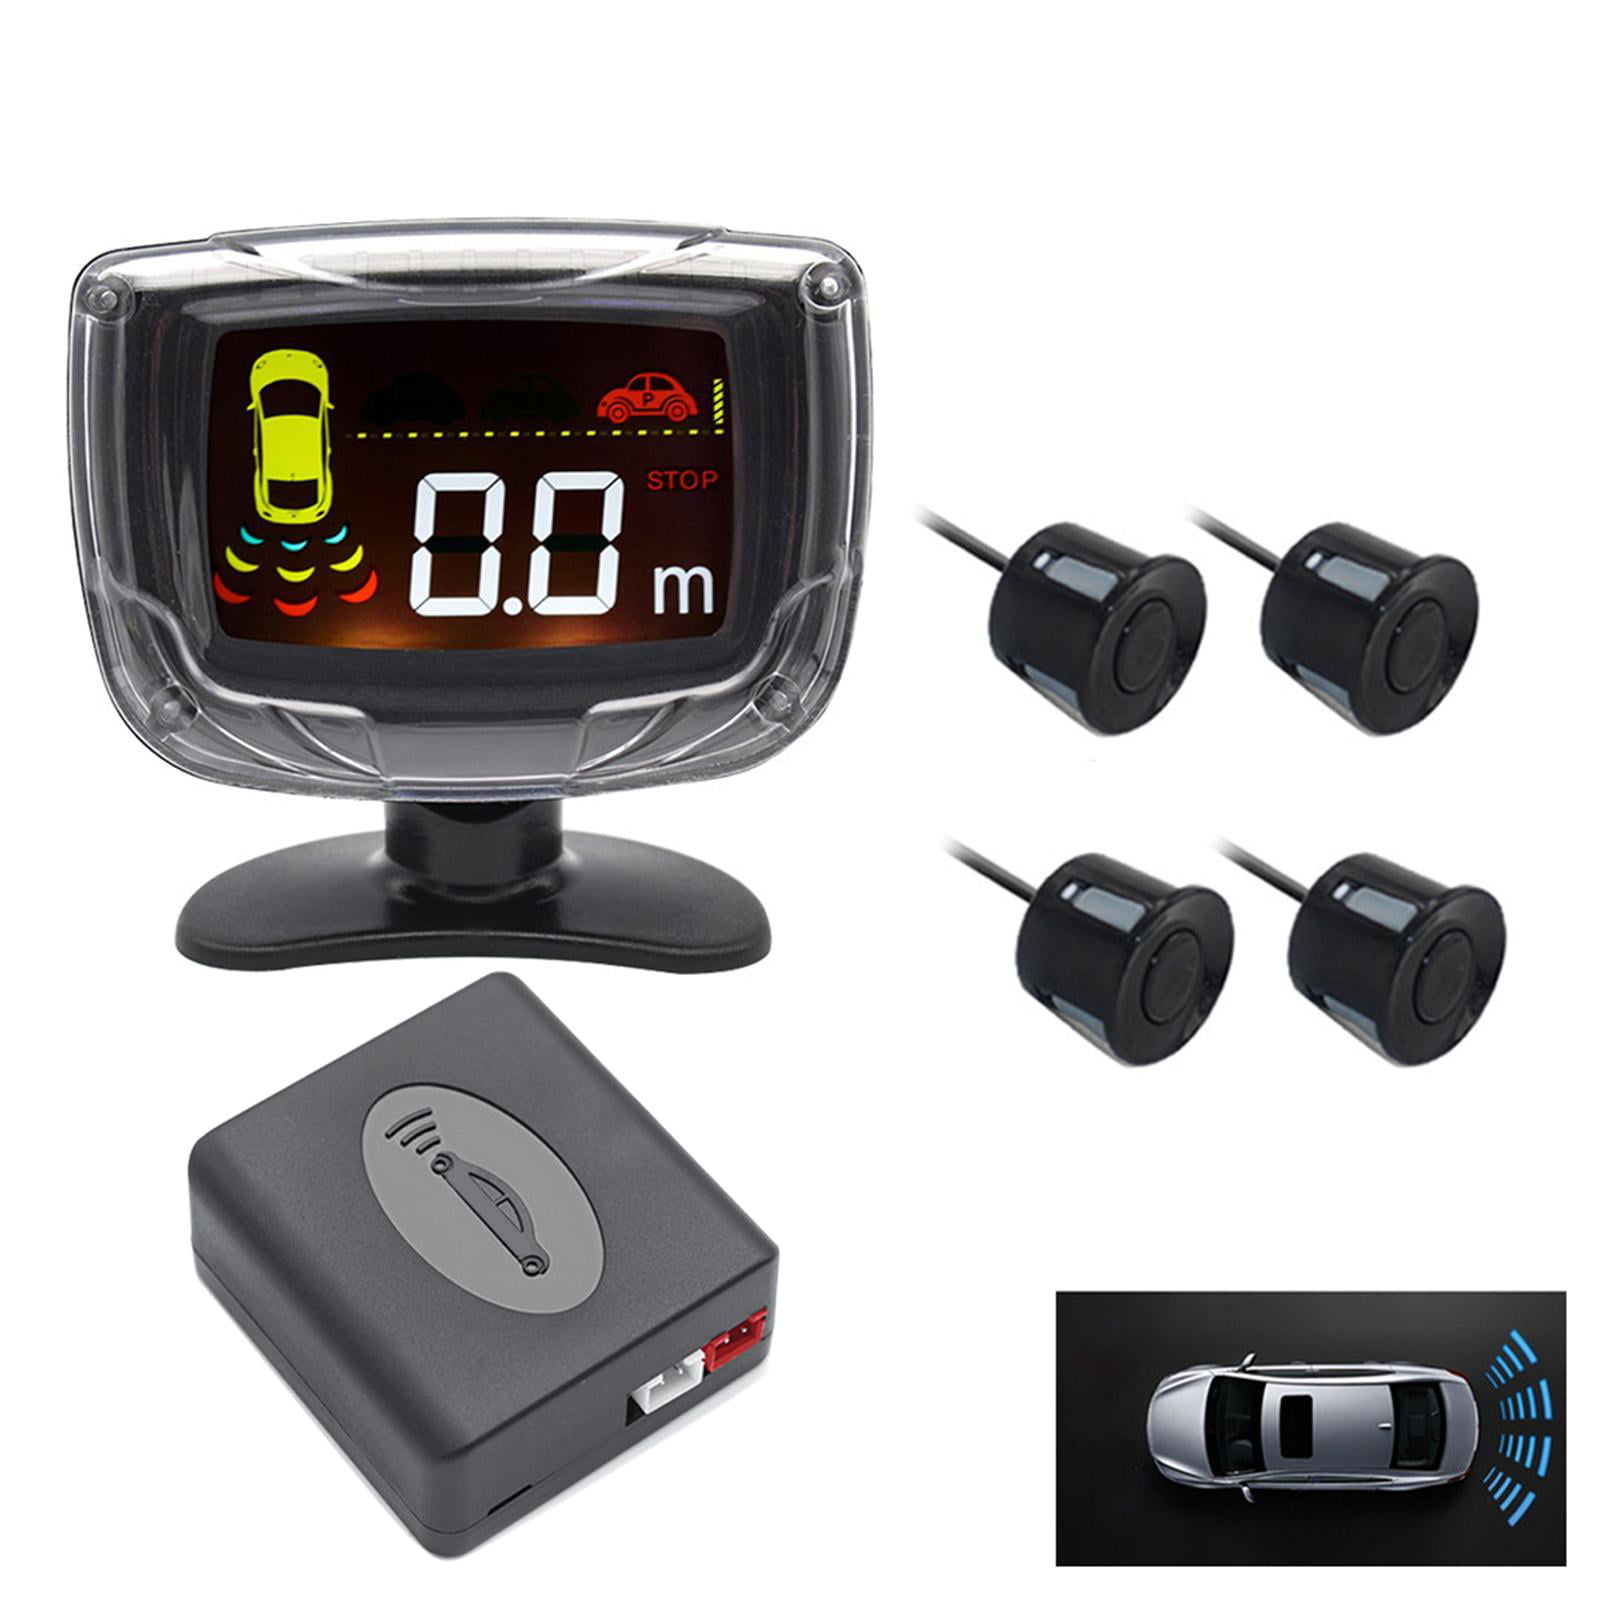 LED Display Car 4 Parking Sensor Reverse Audio Backup Radar Alarm System Black 